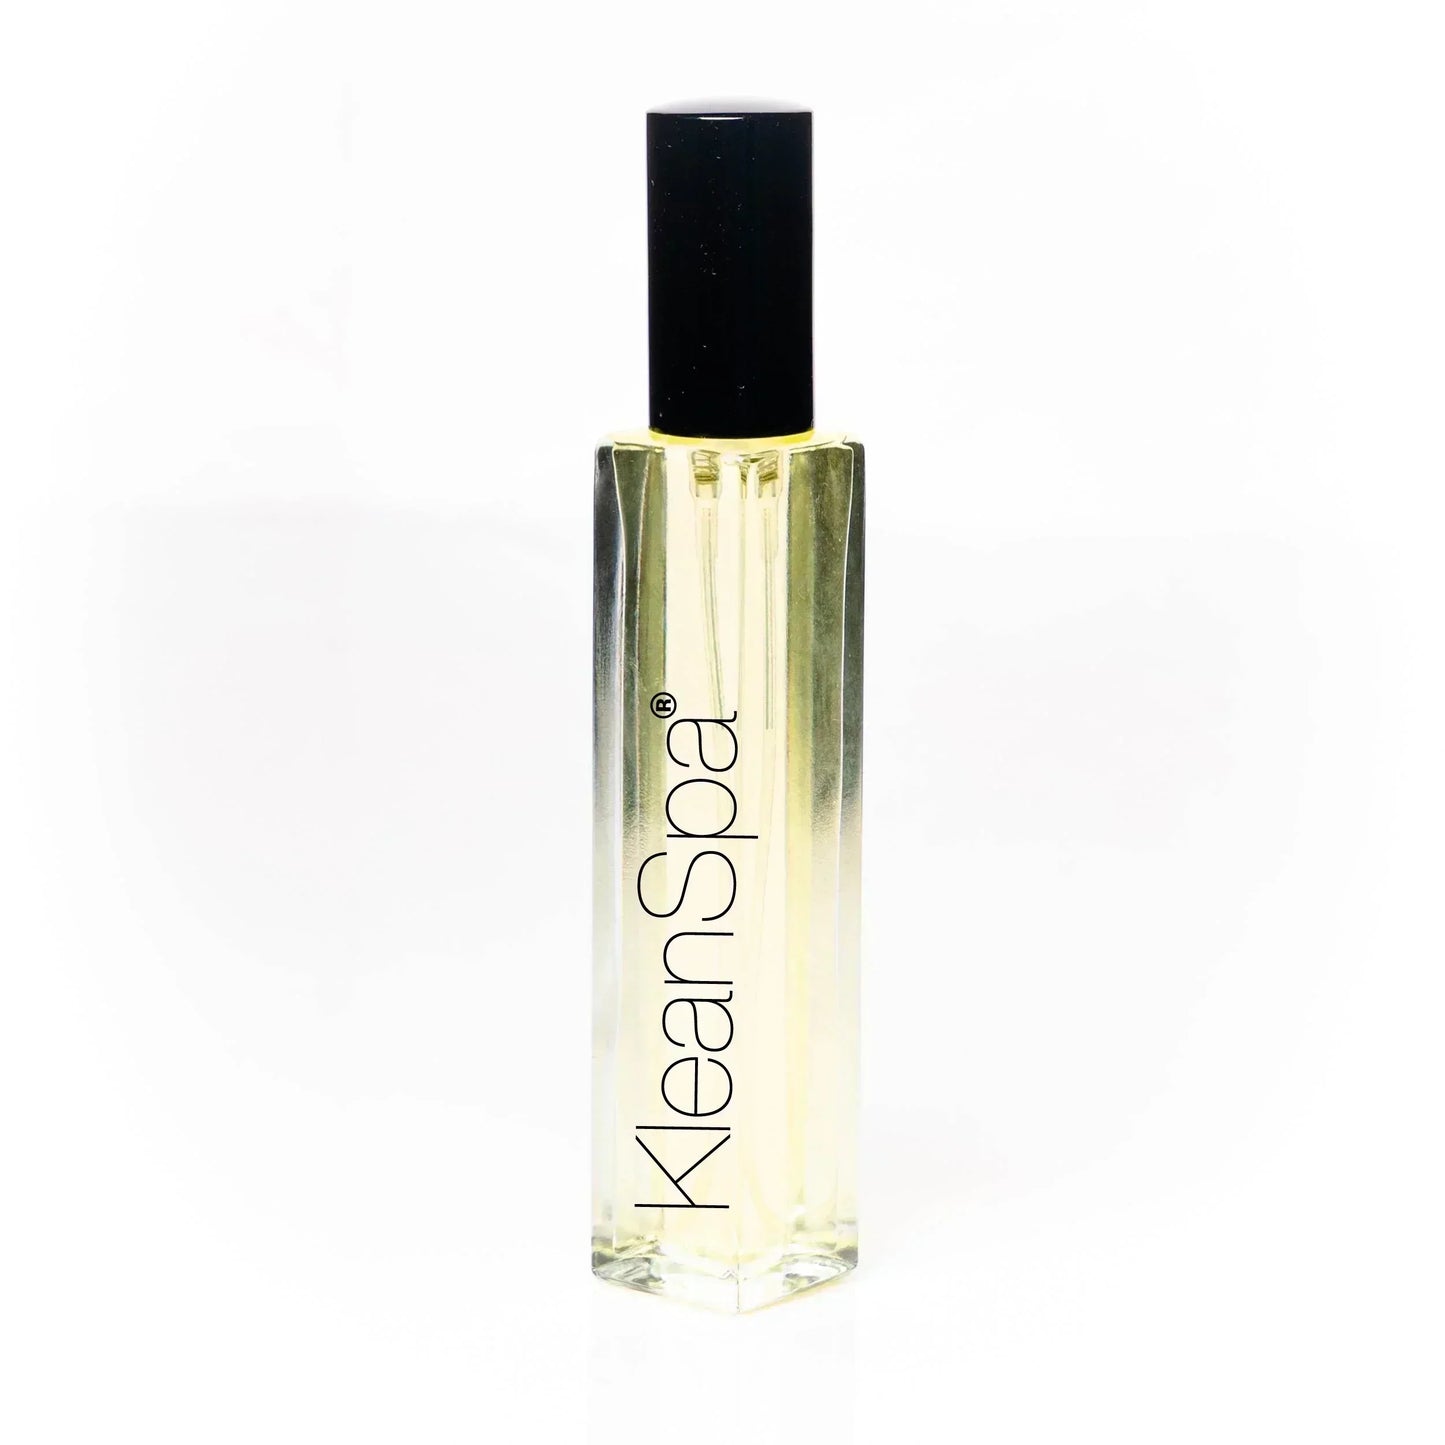 Extrait de Parfum (35% fragrance): Tiare Blossom